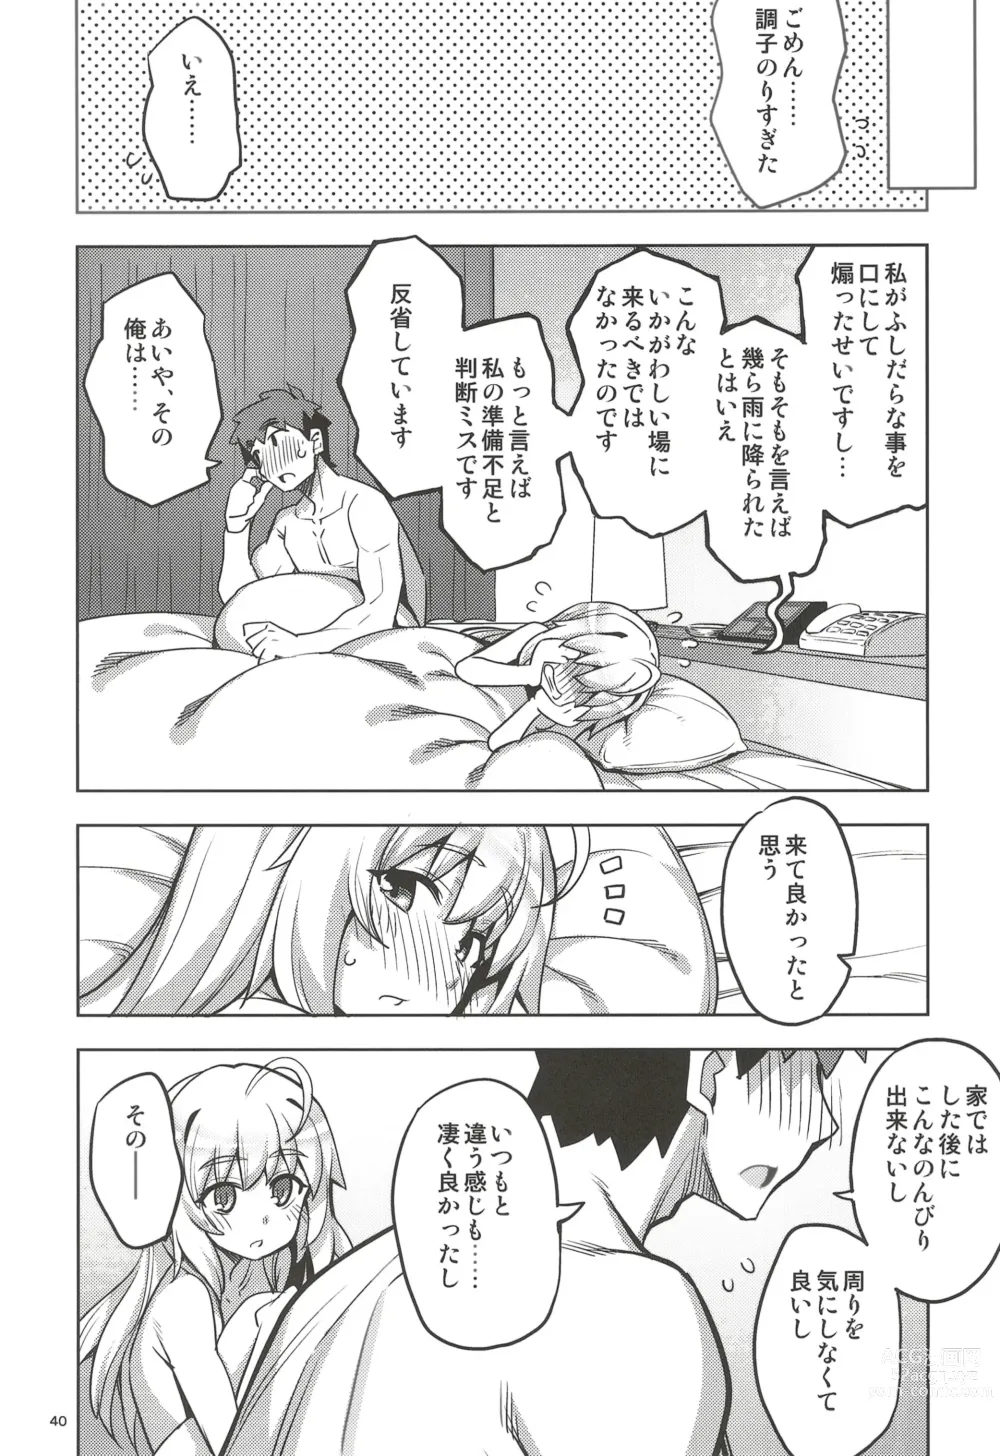 Page 40 of doujinshi RE32